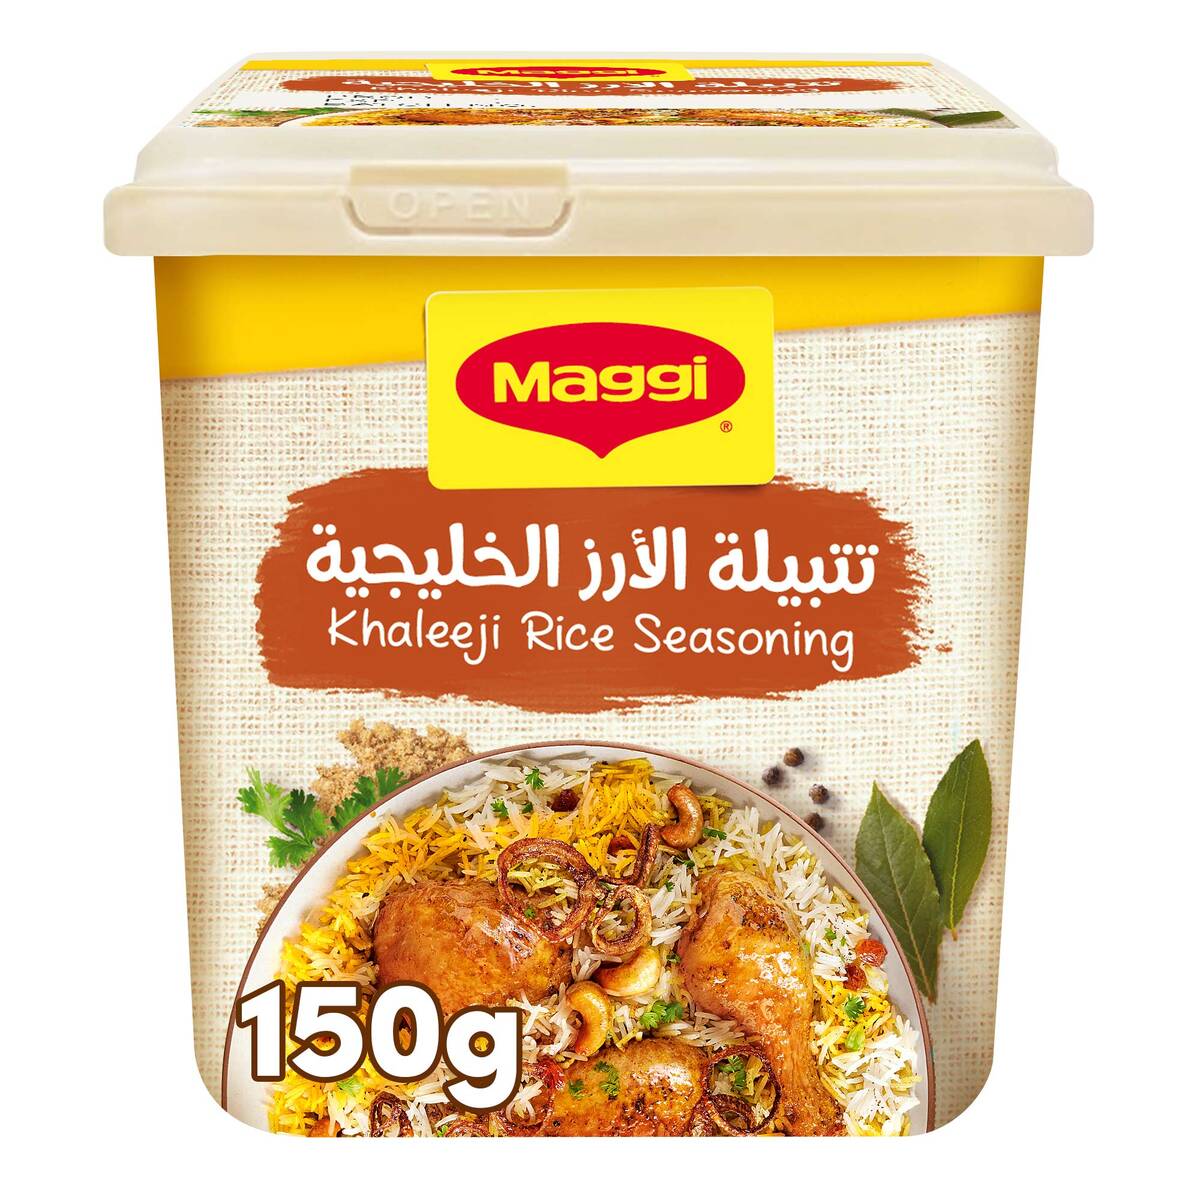 Maggi Khaleeji Rice Seasoning 150 g